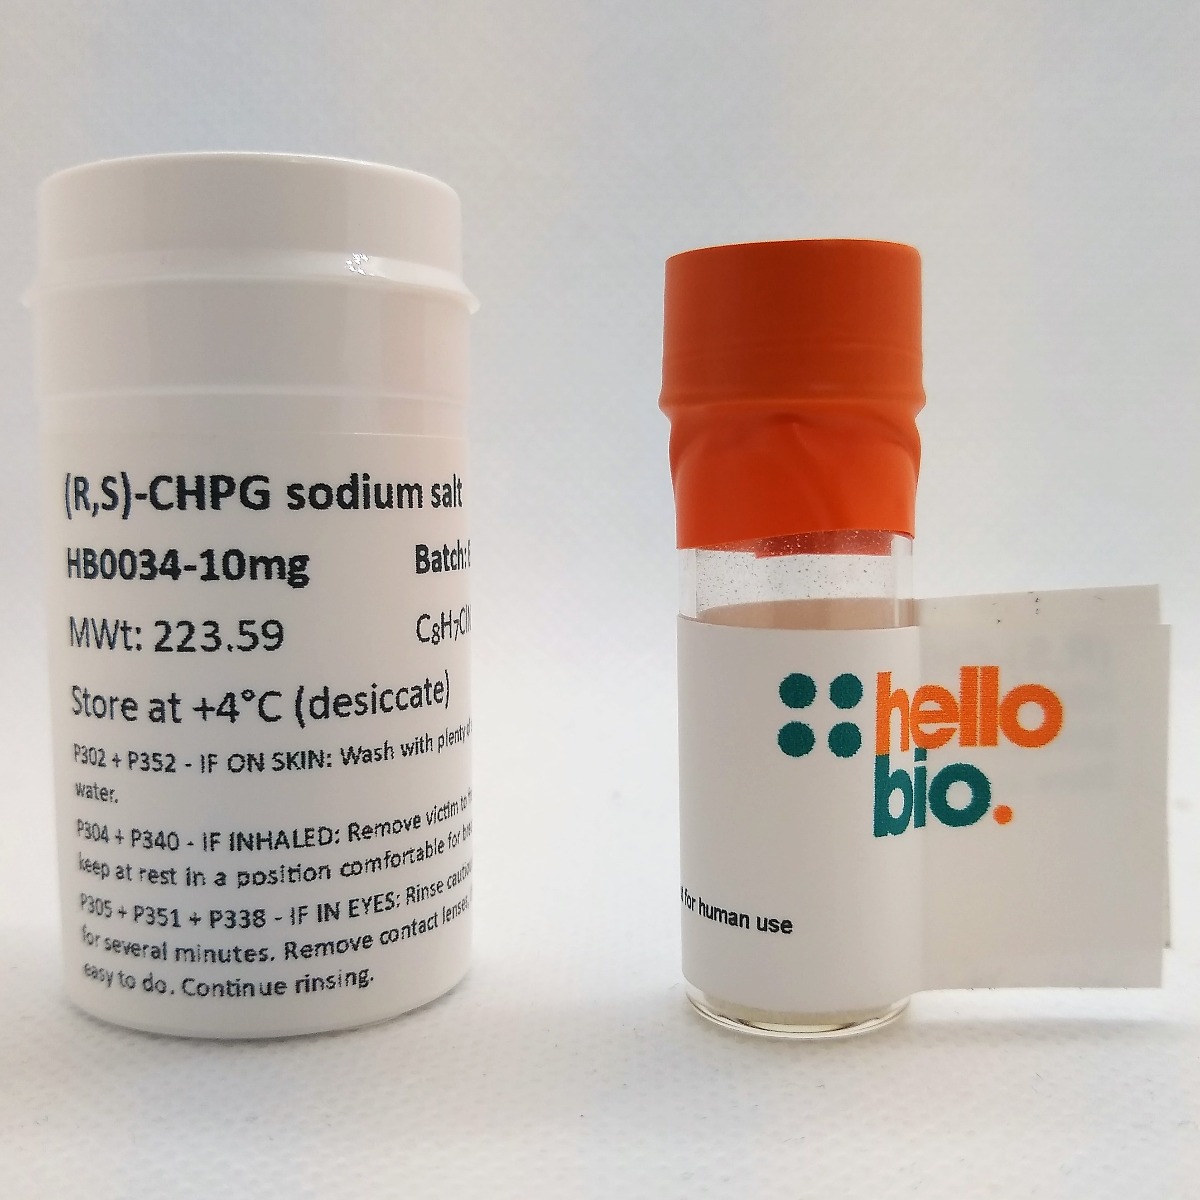 (R,S)-CHPG sodium salt product vial image | Hello Bio